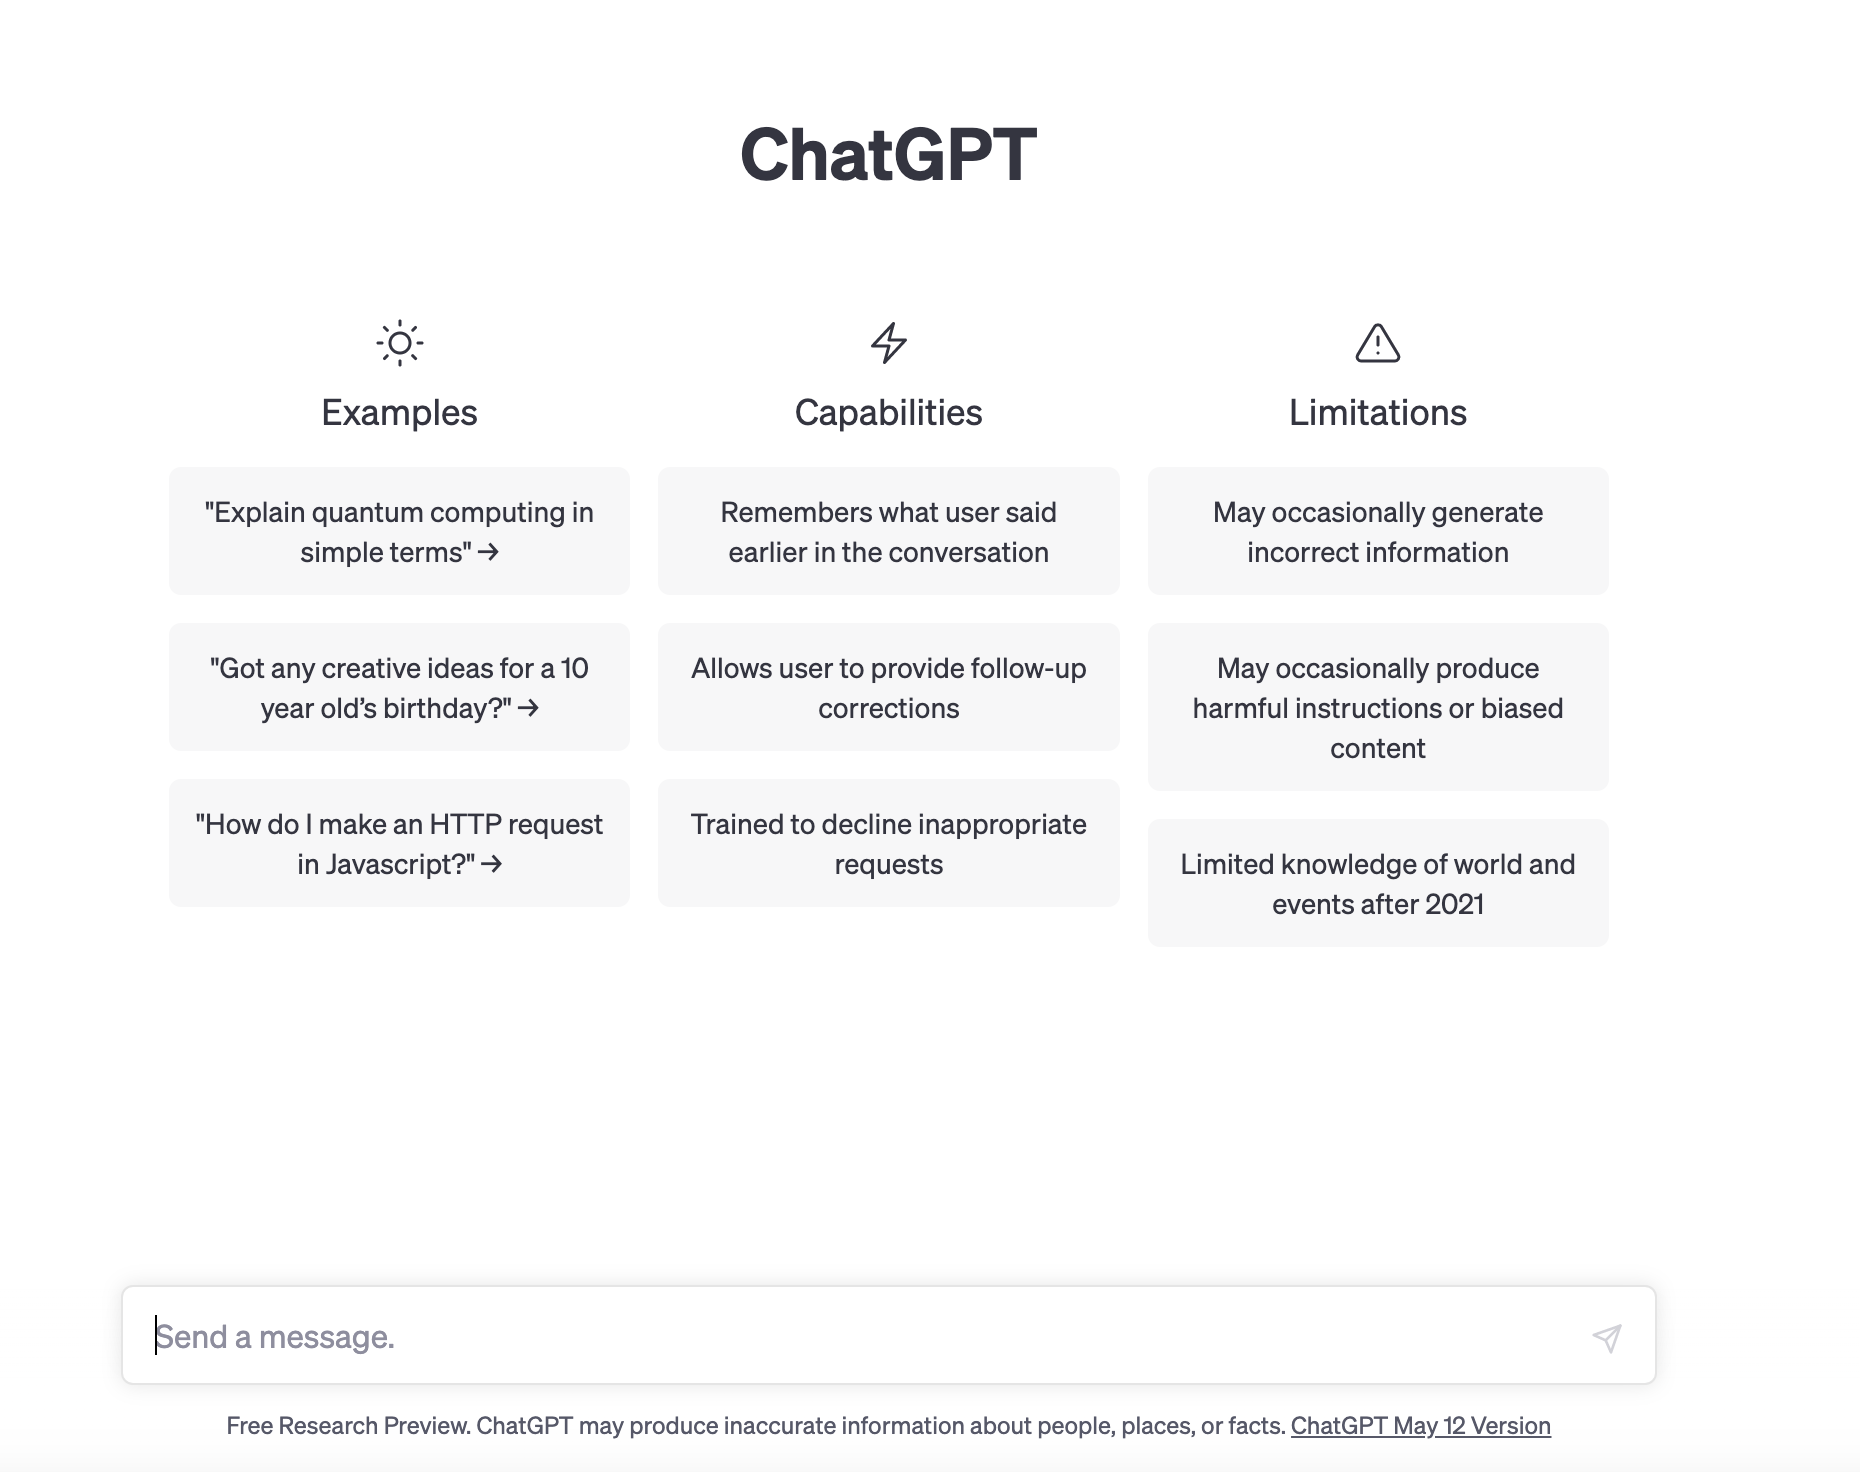 ChatGPT4 examples, capabilities, limitations.